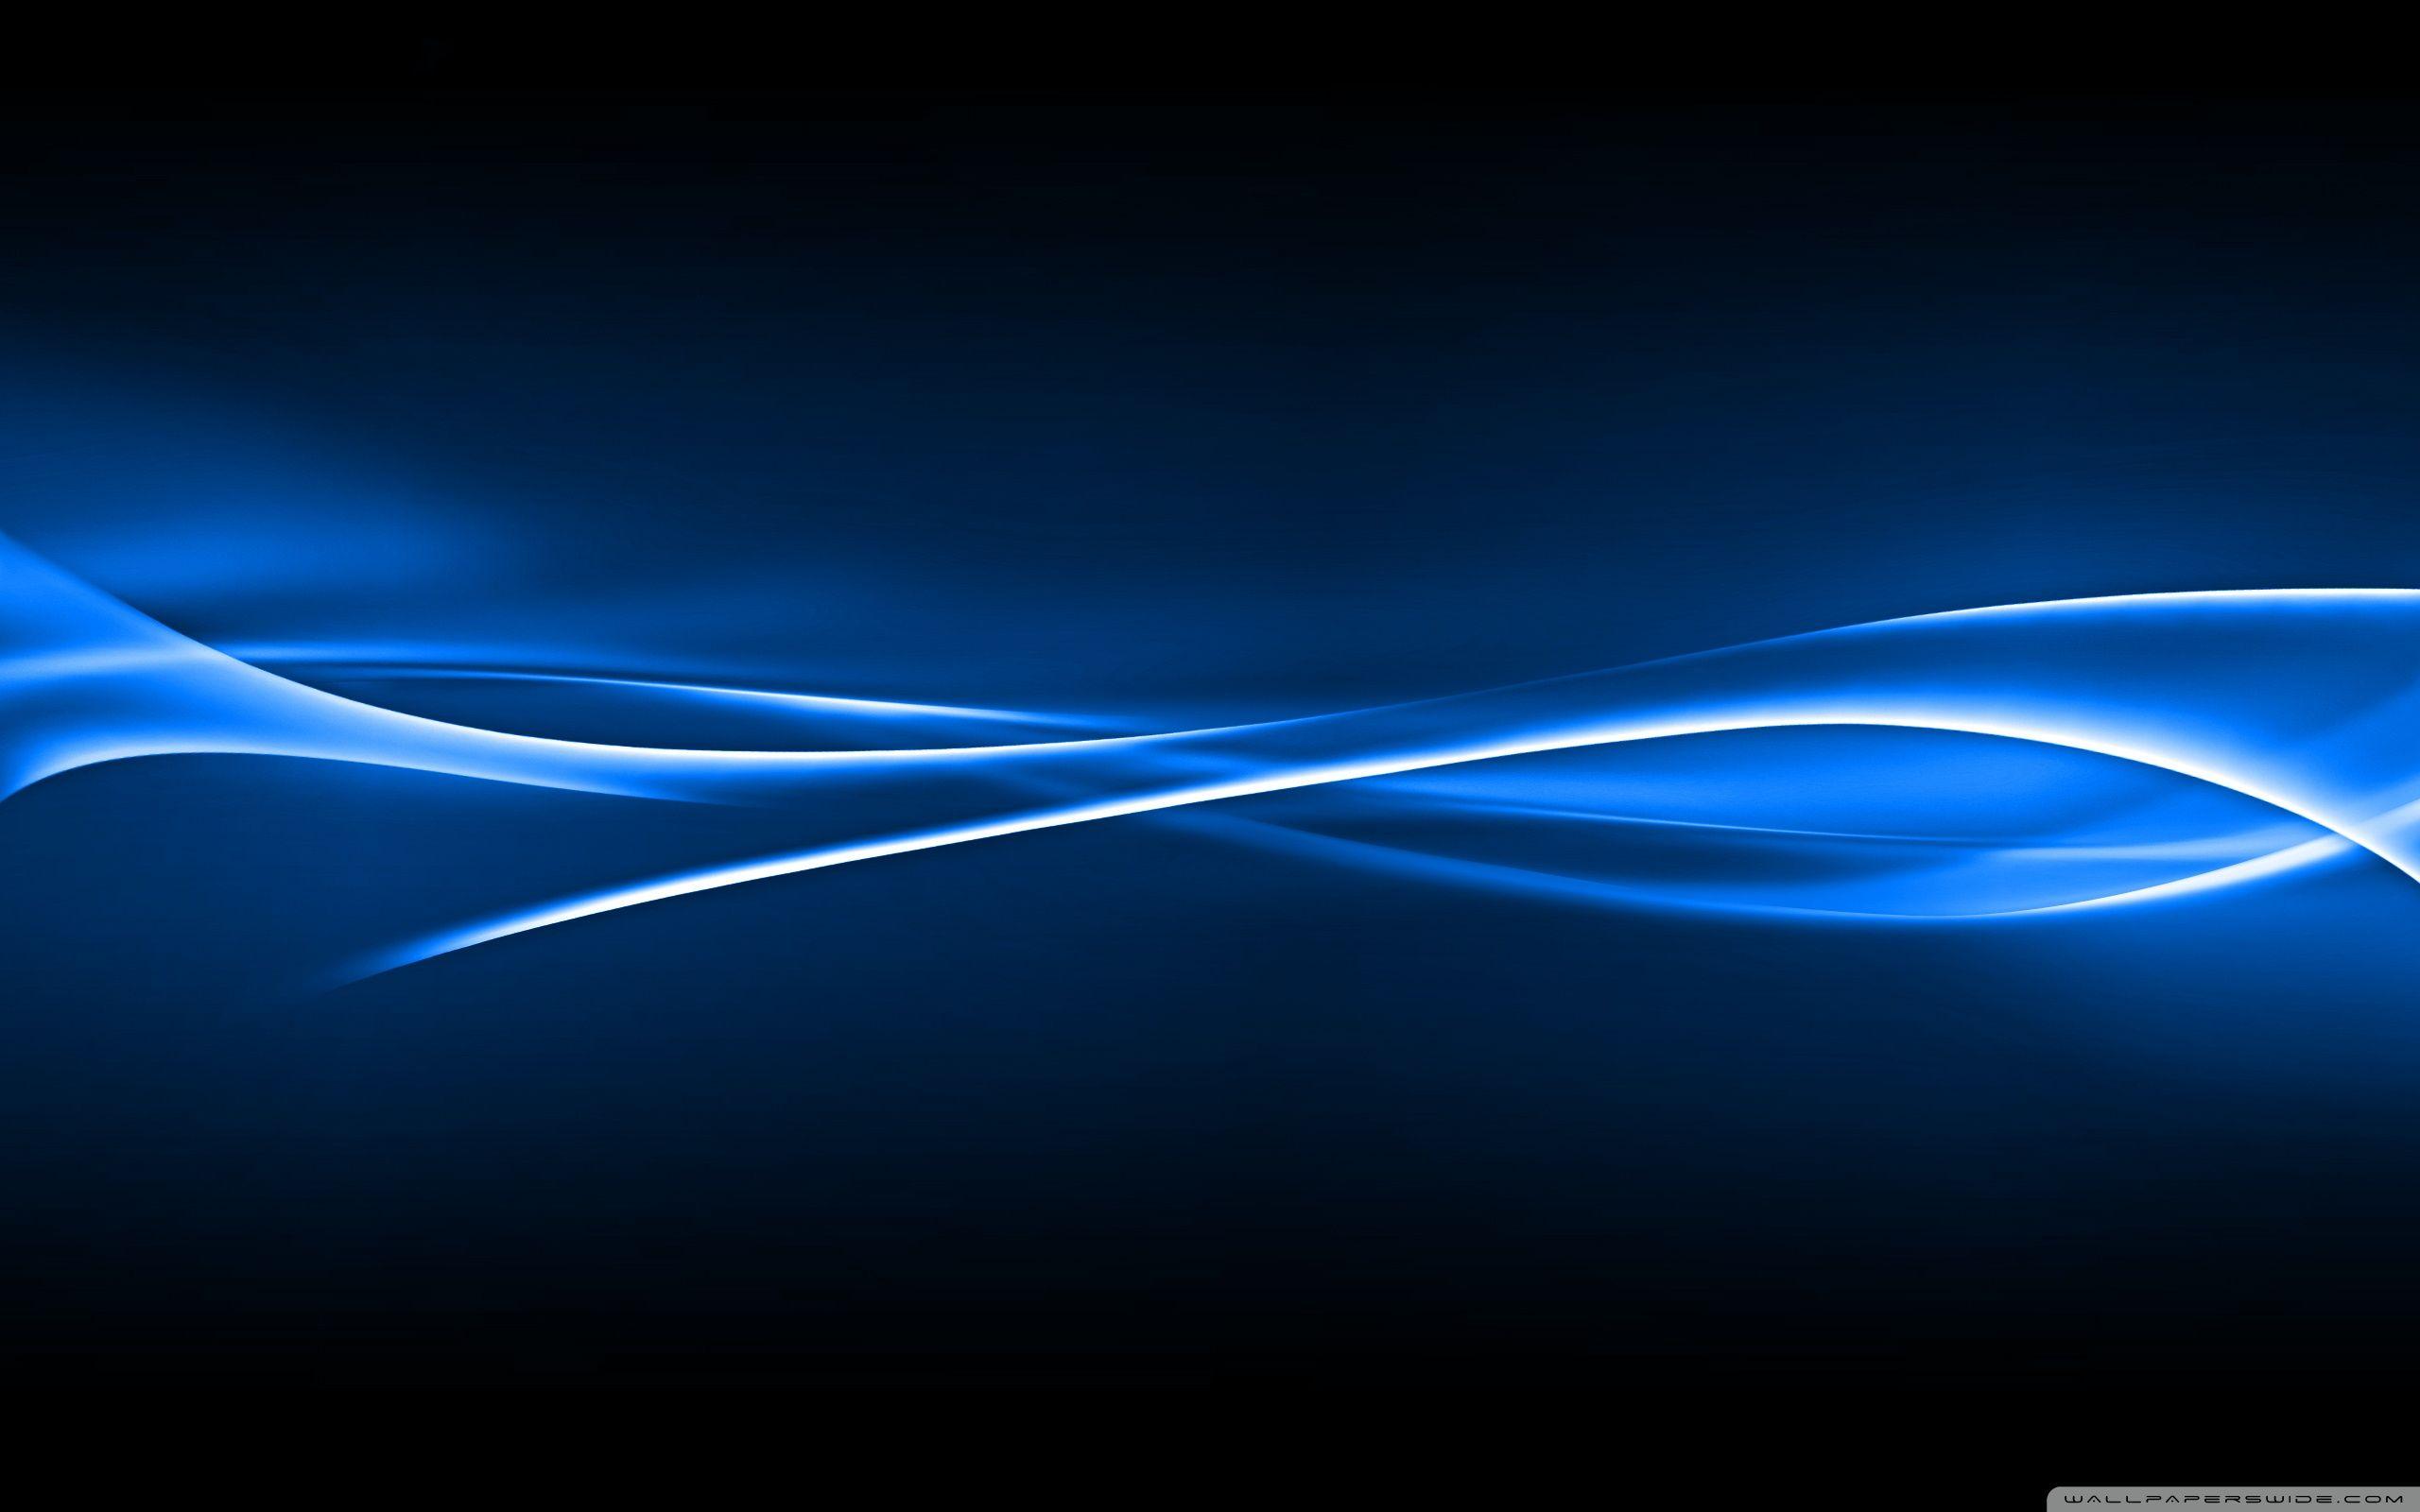 Blue Light Wave Ultra HD Desktop Background Wallpaper for 4K UHD TV, Multi Display, Dual Monitor, Tablet